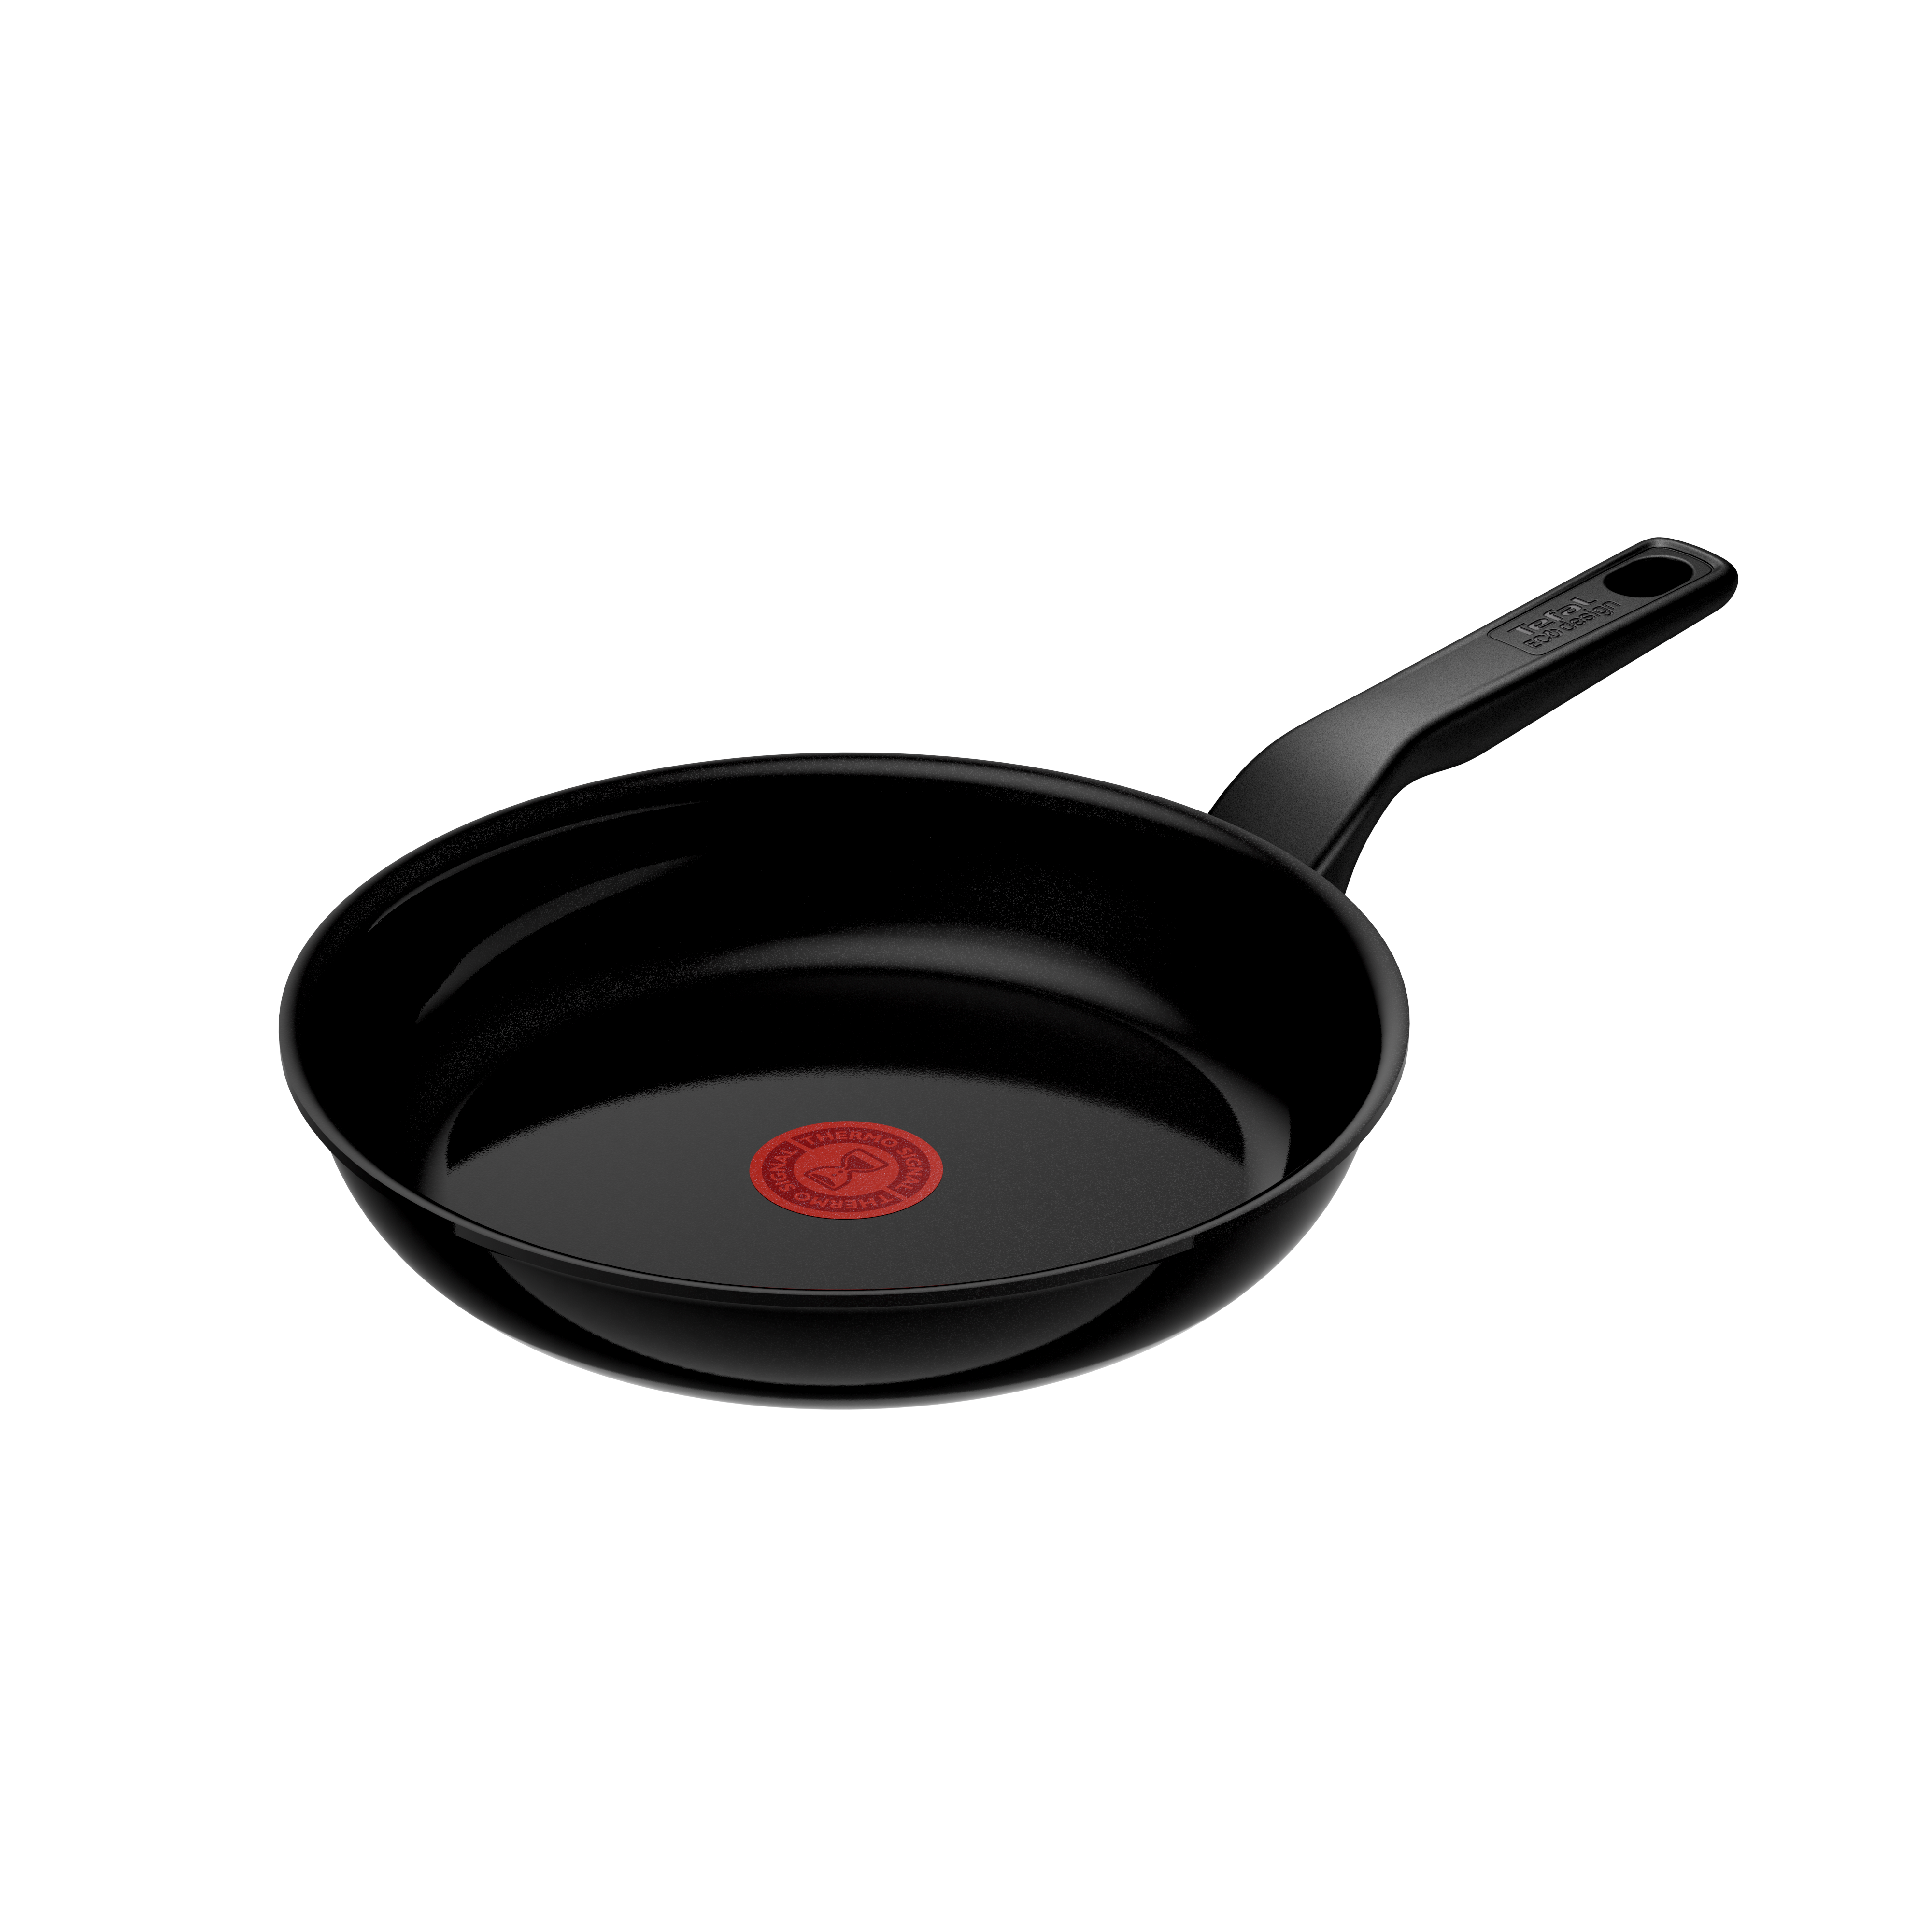 Tefal Renew Black Frypan 20cm - C4320223 - Ceramic Non-Stick Coating